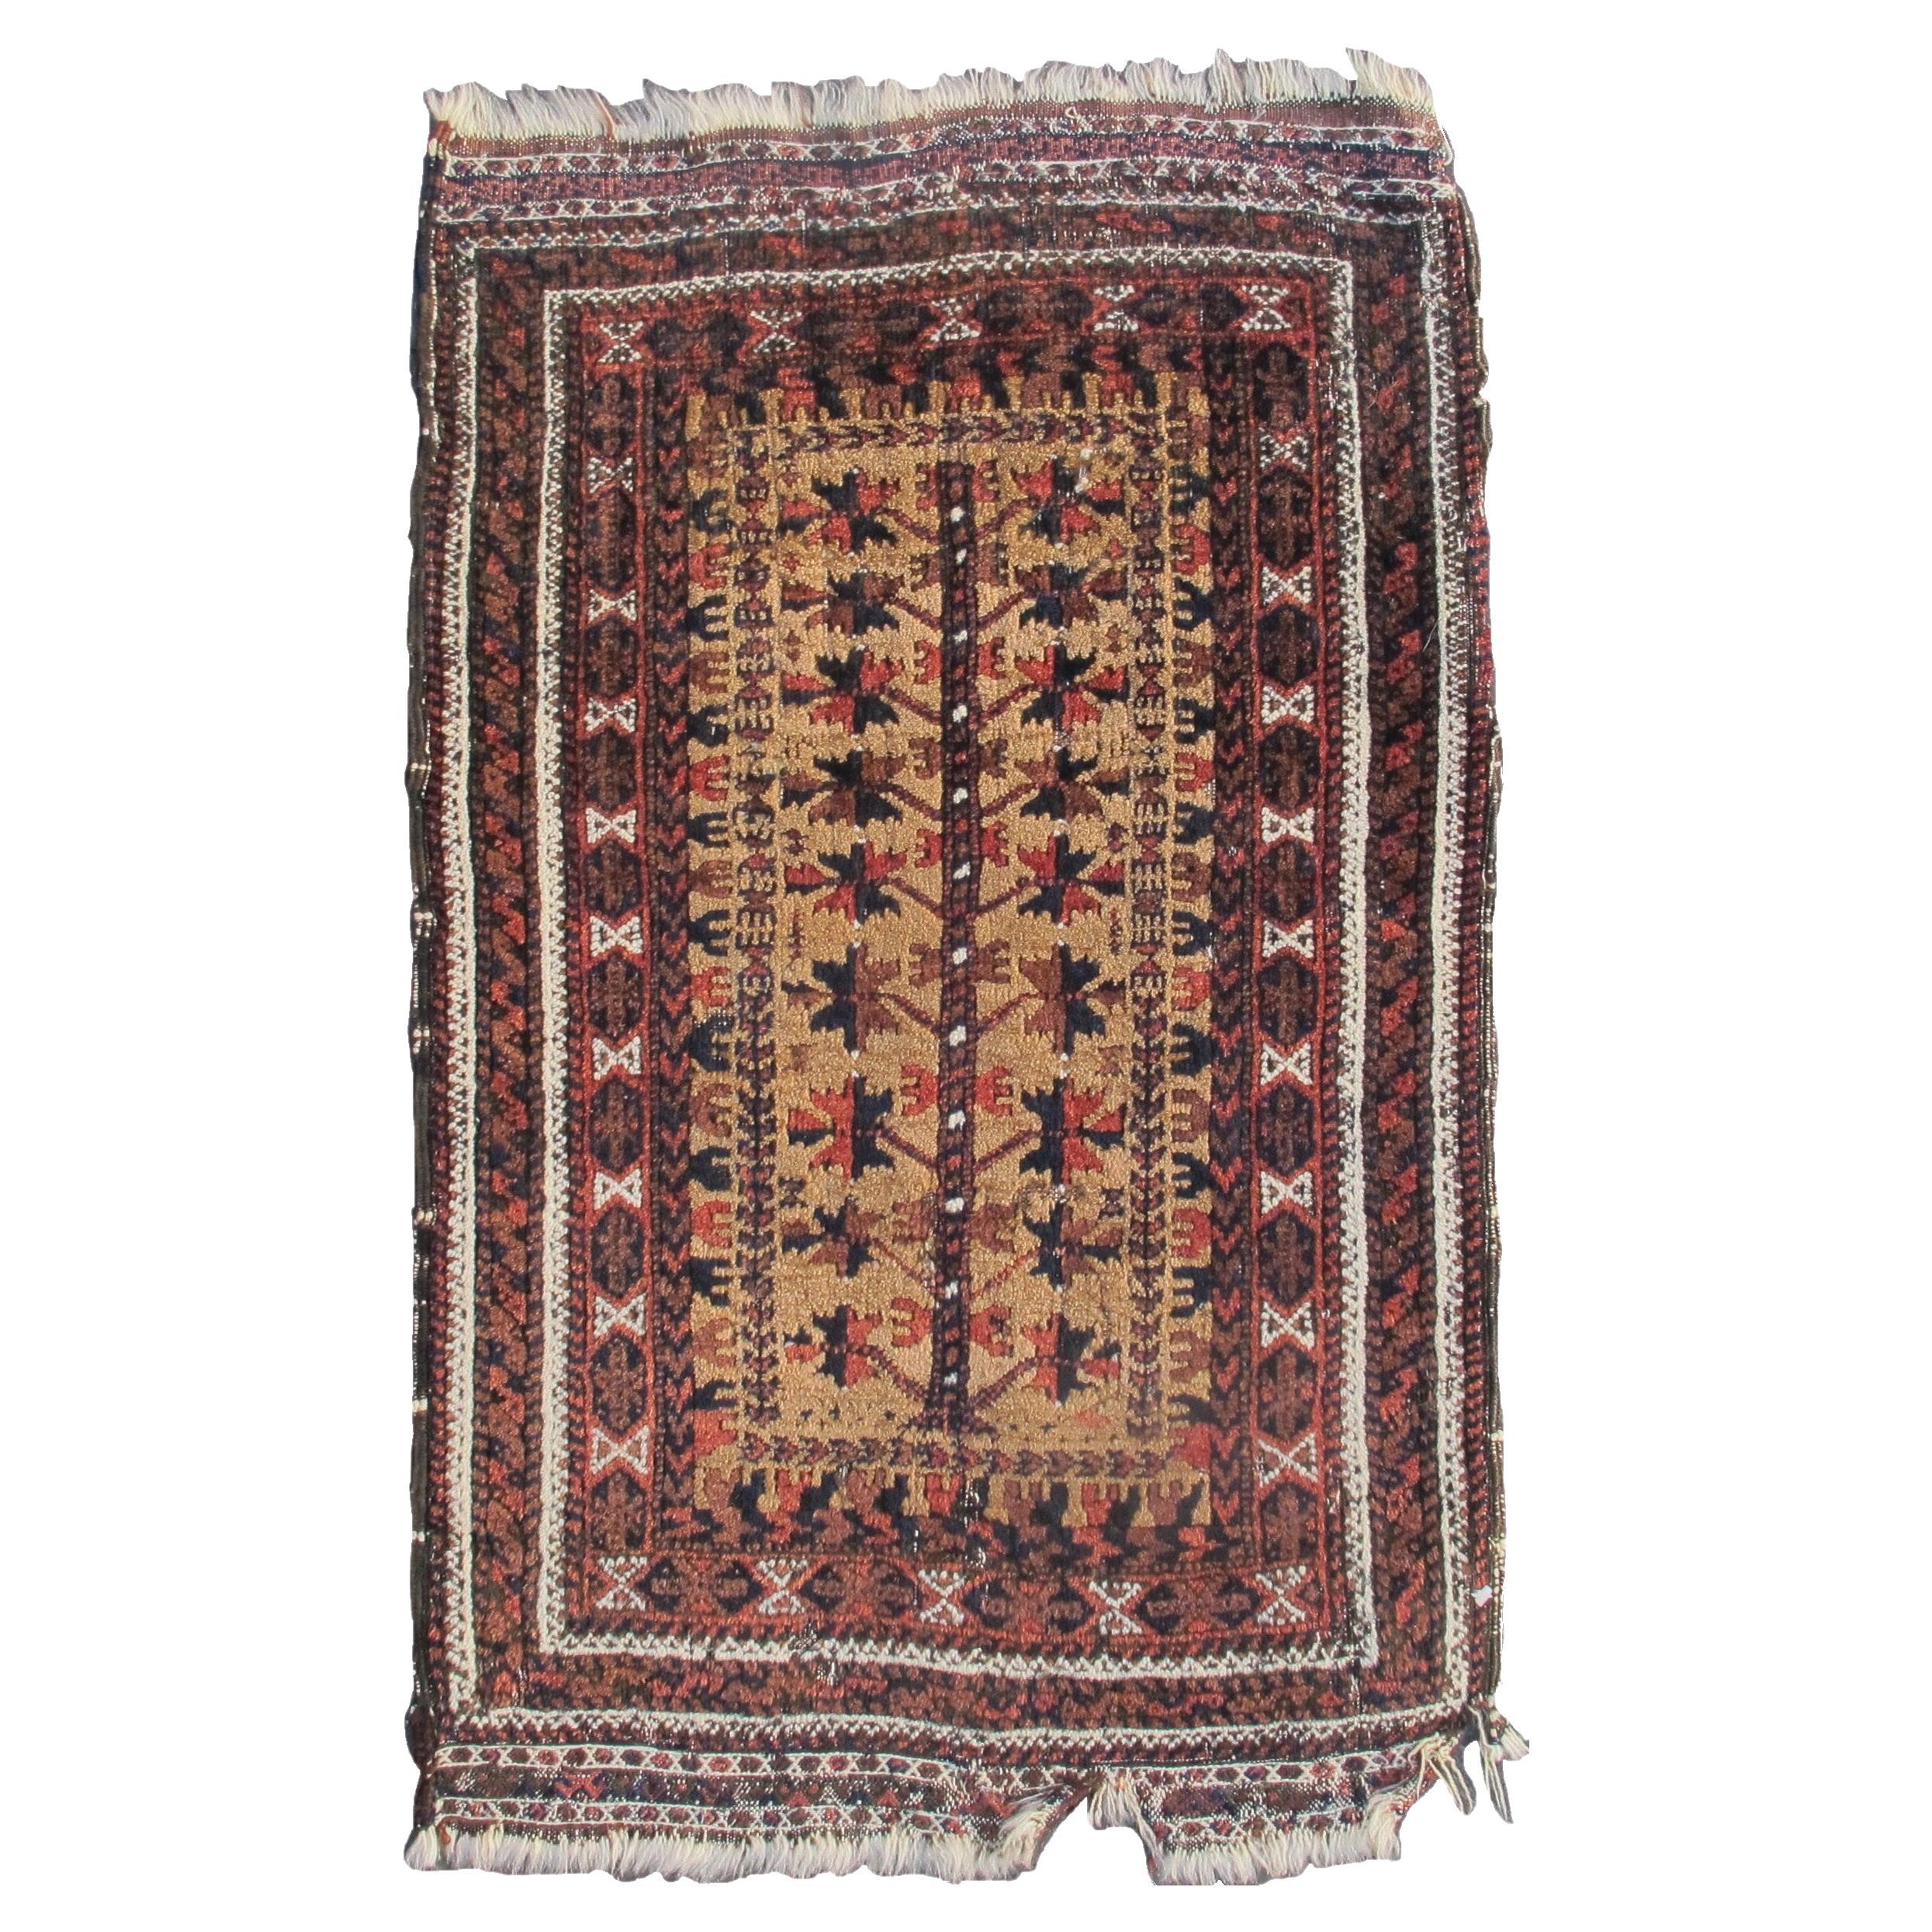 Antiker persischer Baluch-Balisht-Teppich, spätes 19. Jahrhundert